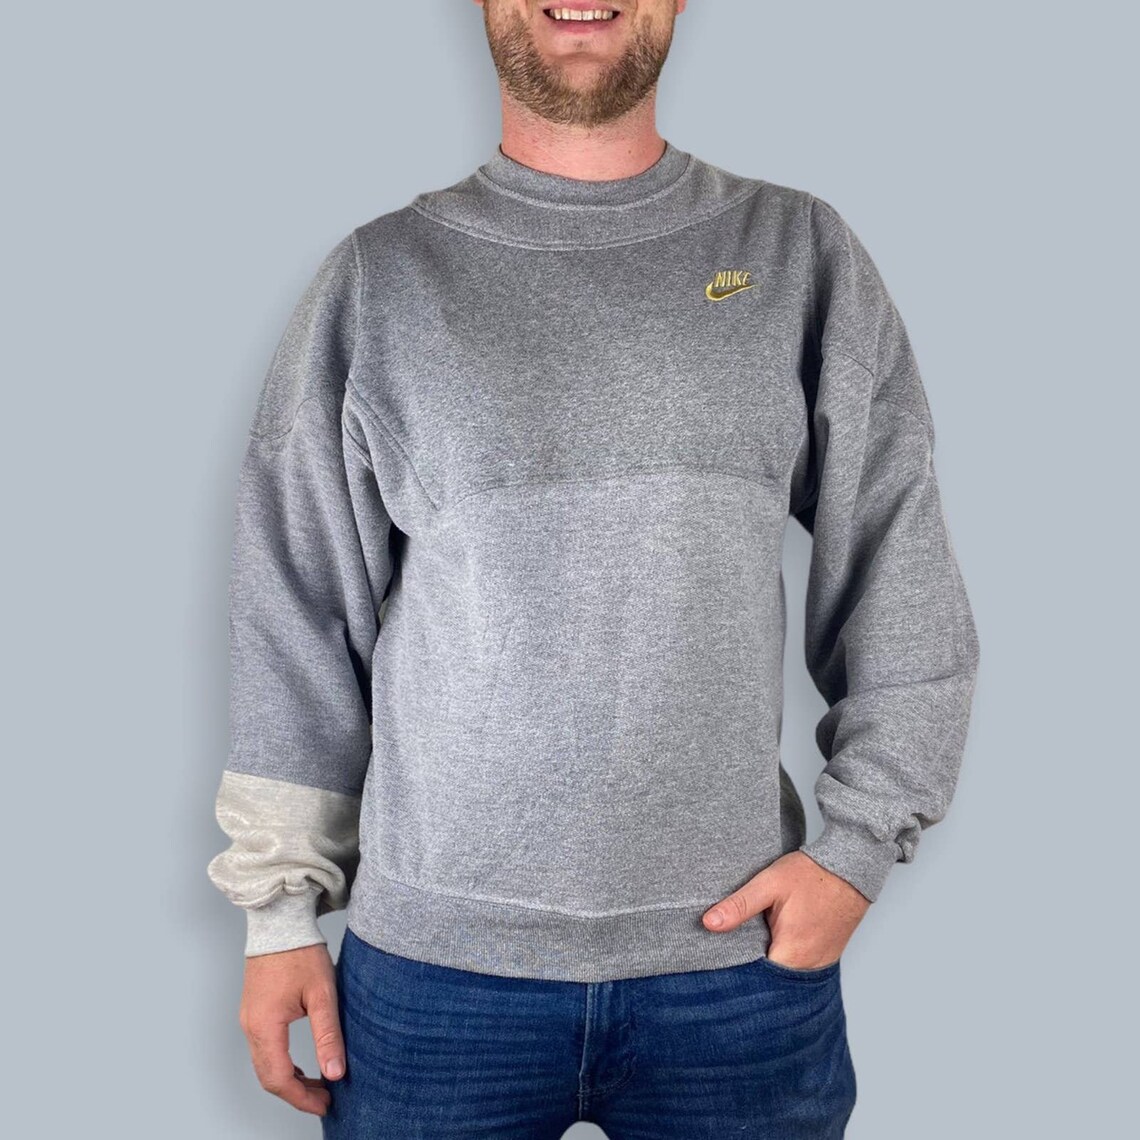 Reworked Grey Nike Crew Neck Sweater S | Etsy